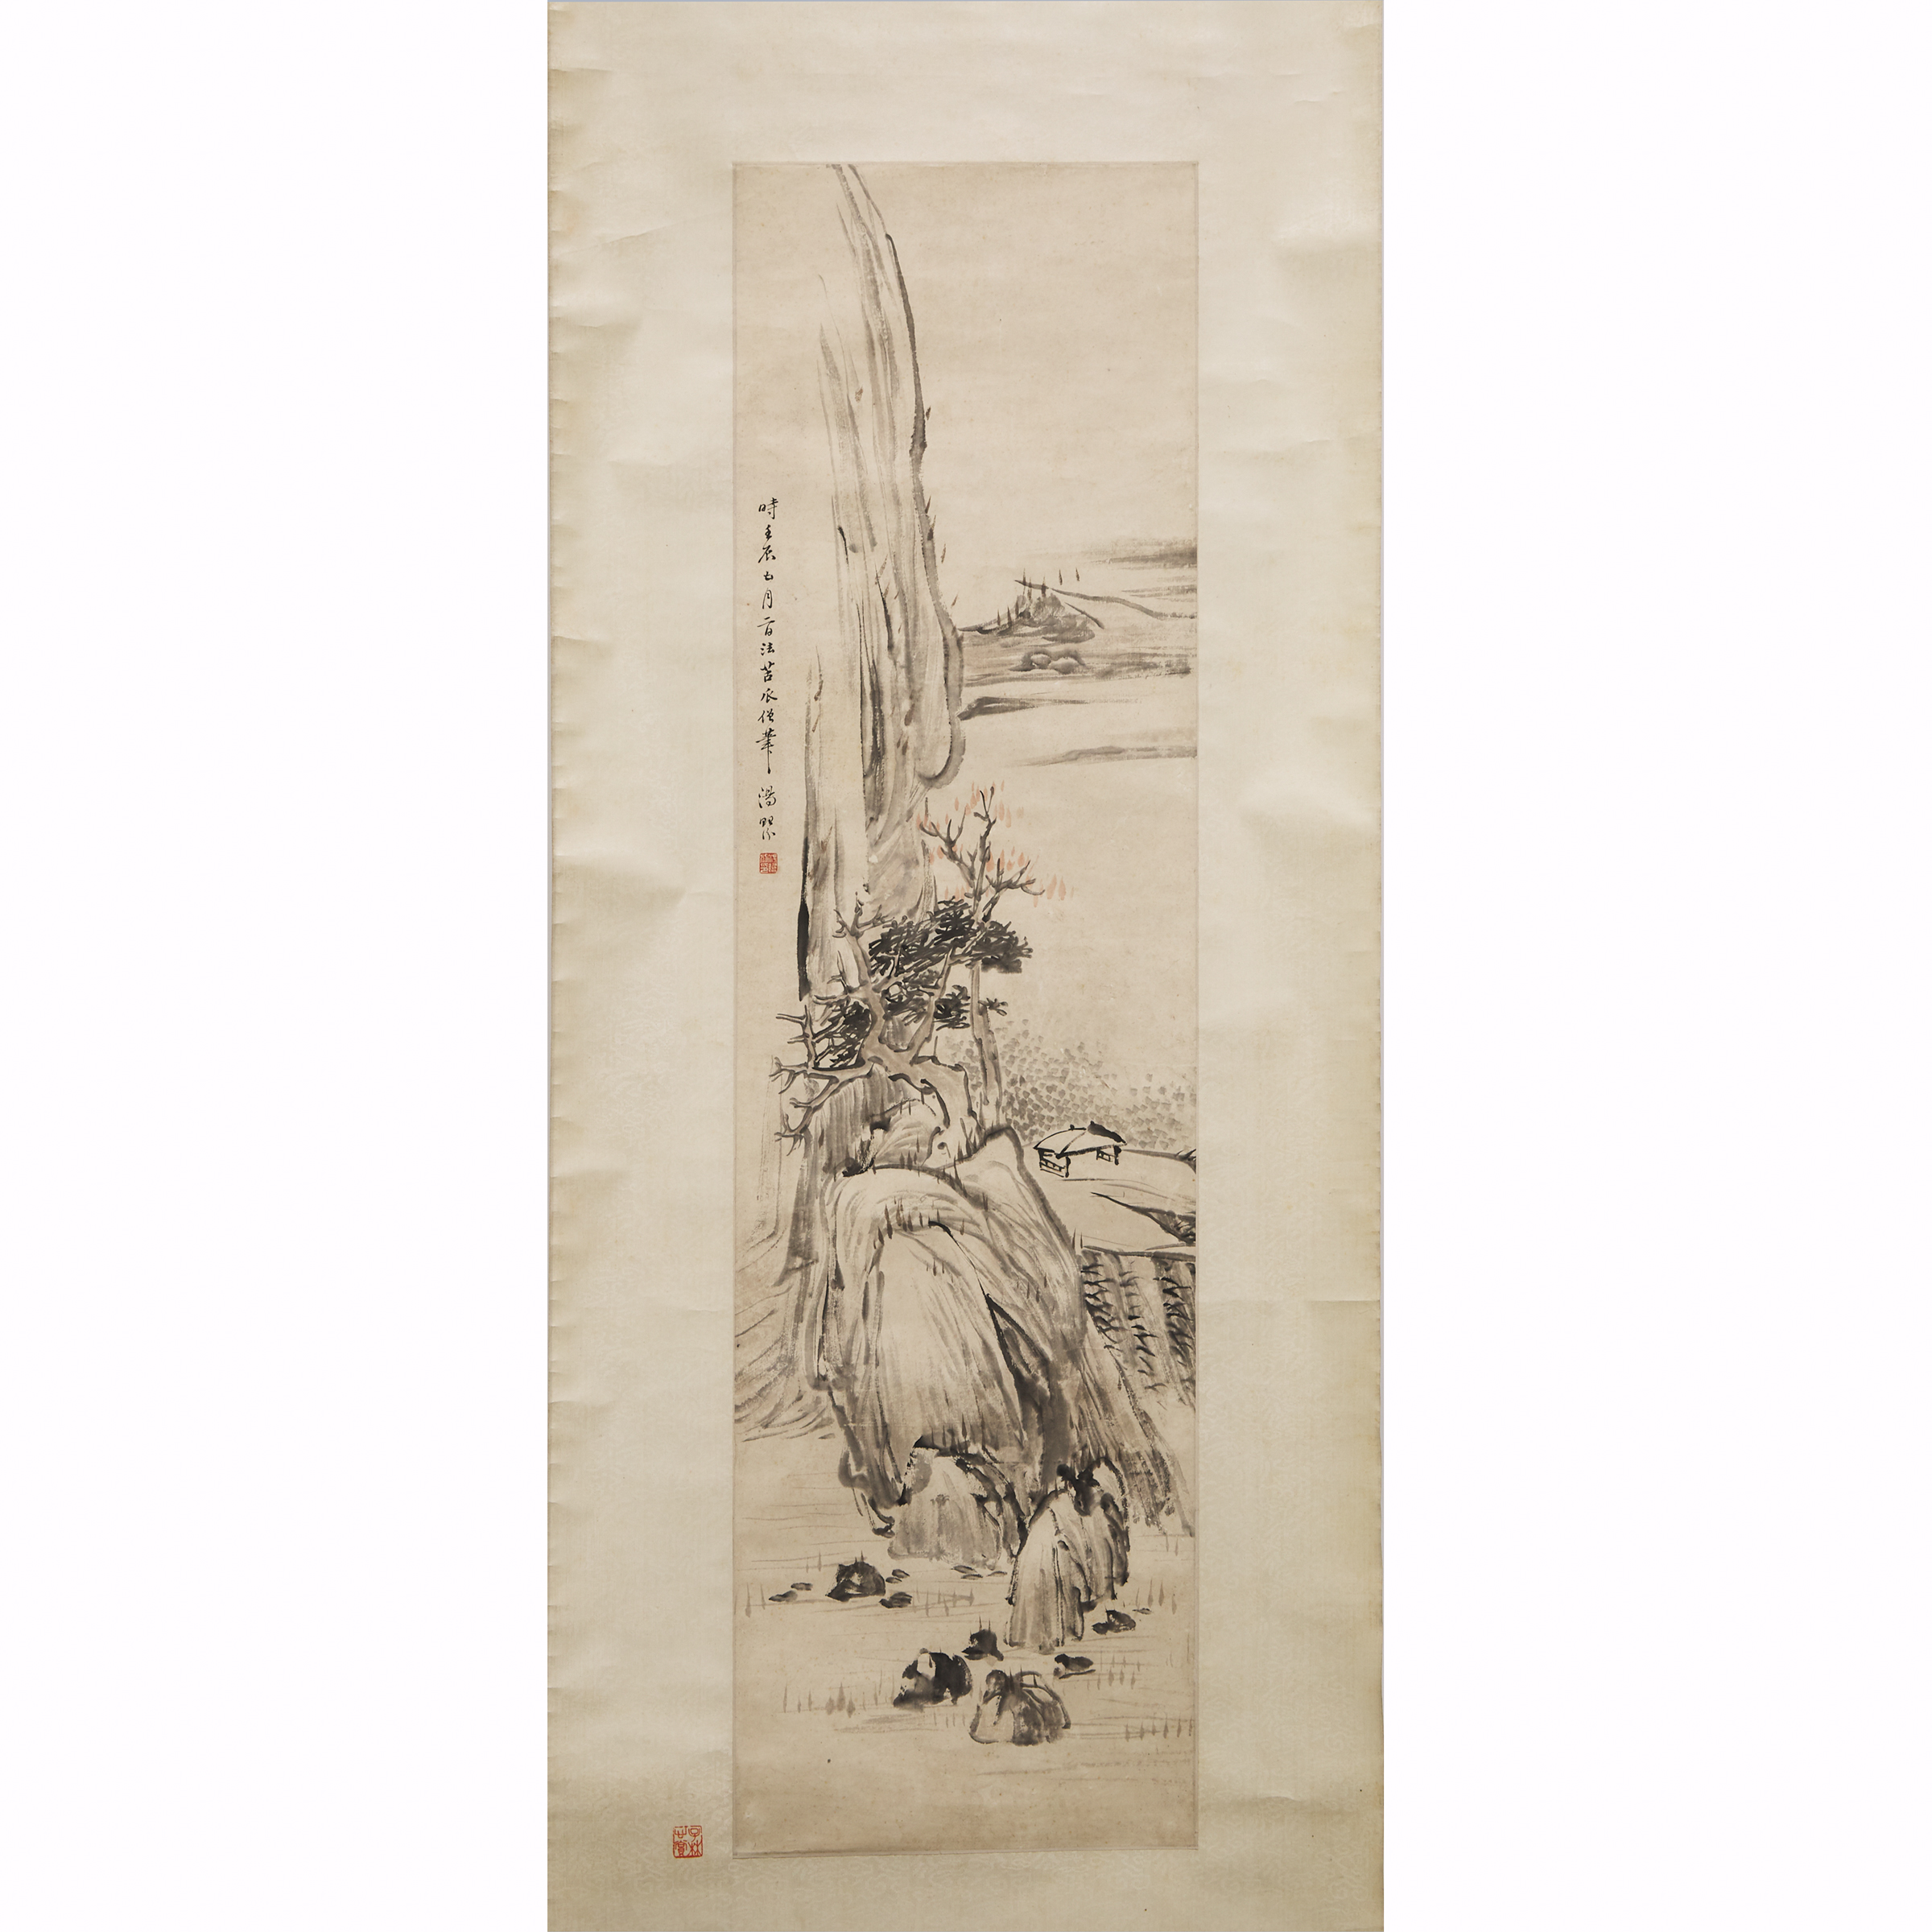 Tang Yifen (1778-1853), Landscape